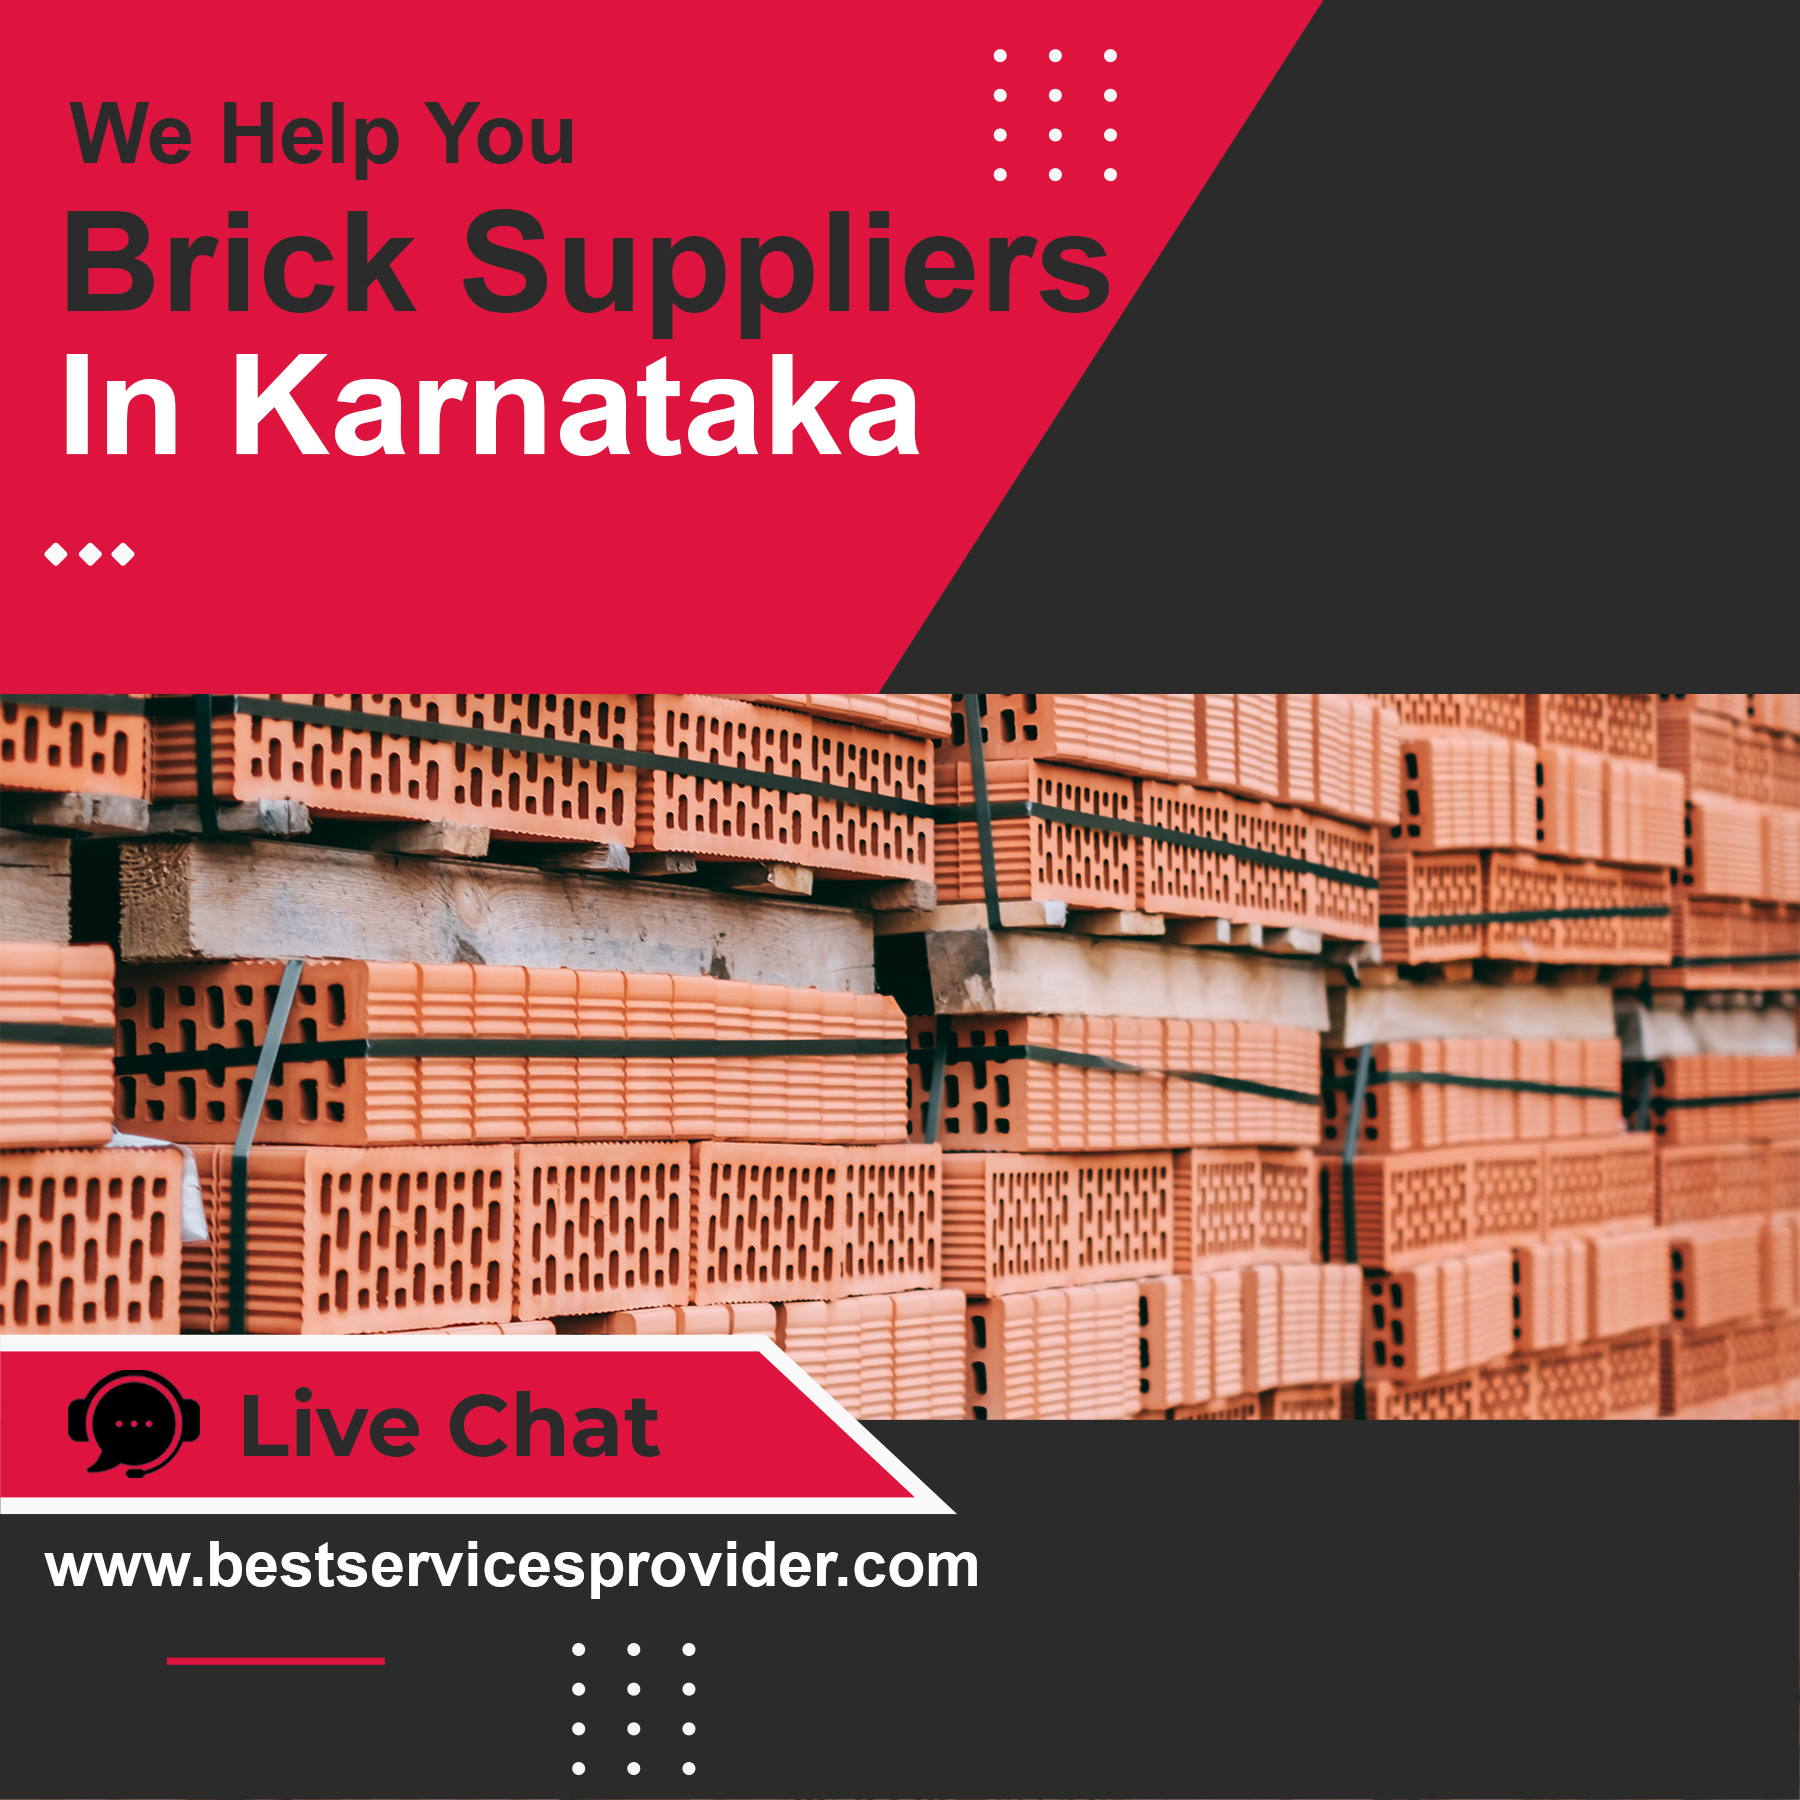 Brick Suppliers In Karnataka